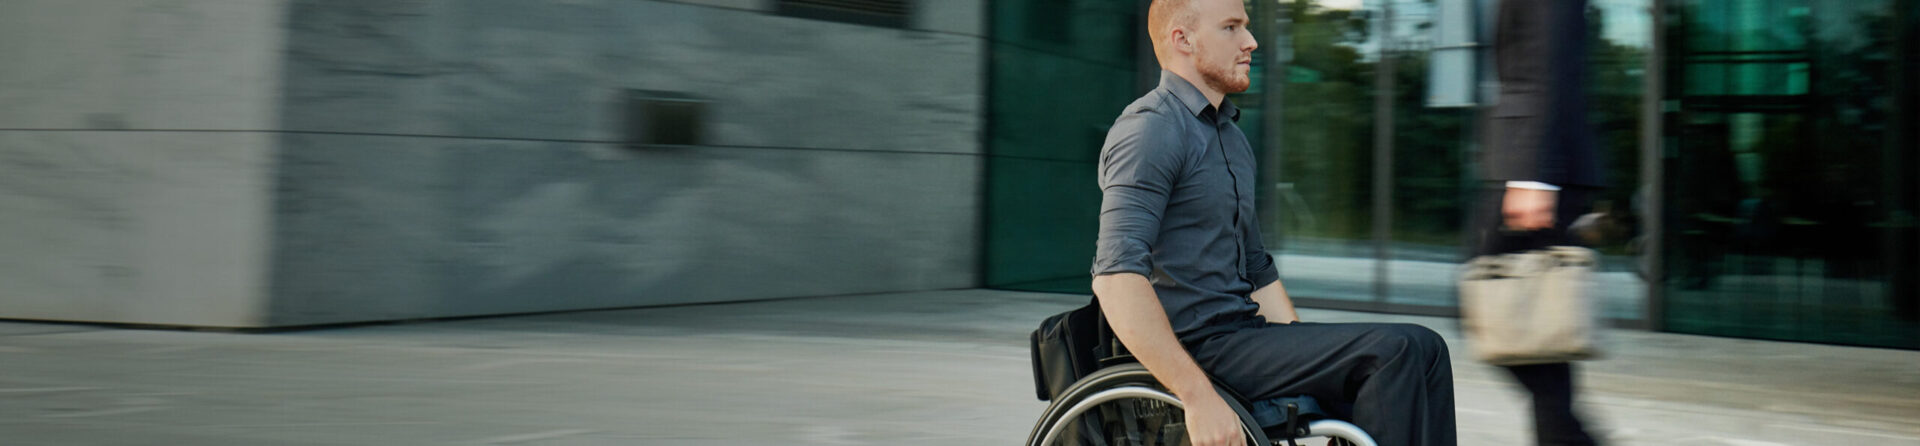 Man in wheelchair on city street.